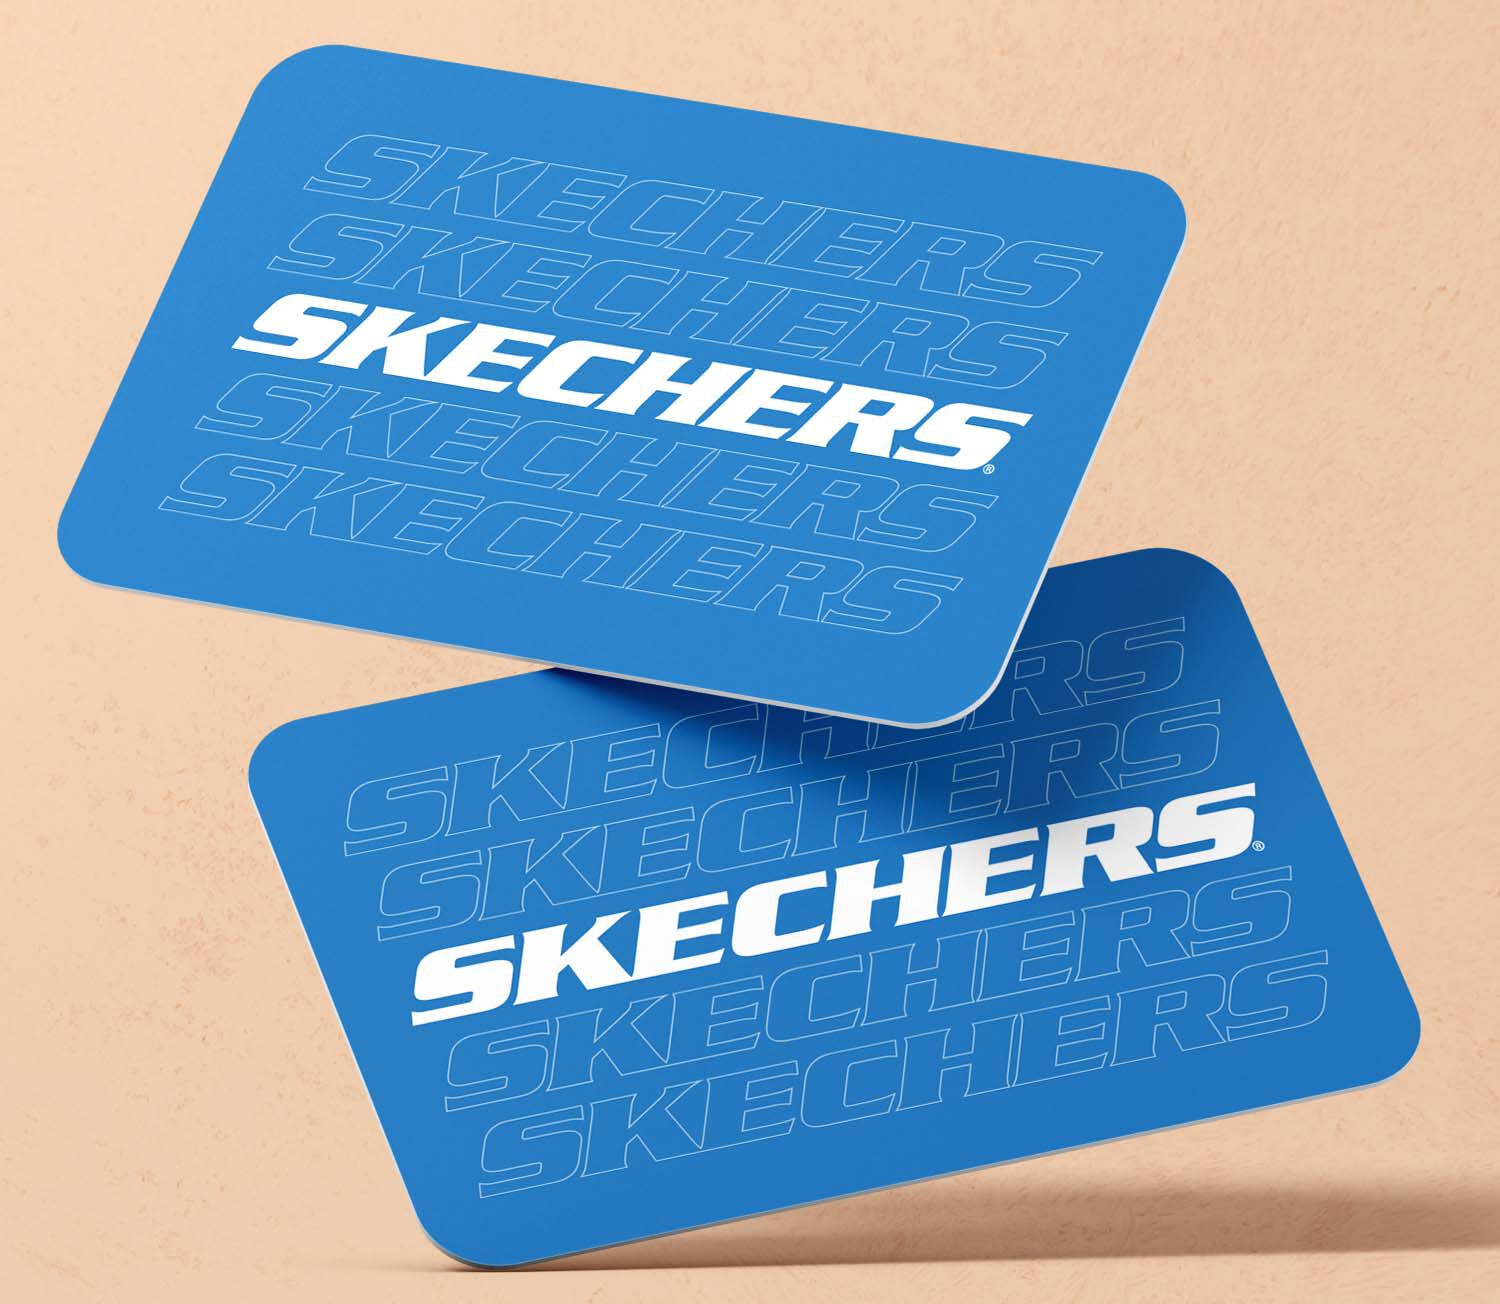 Skechers gift card image